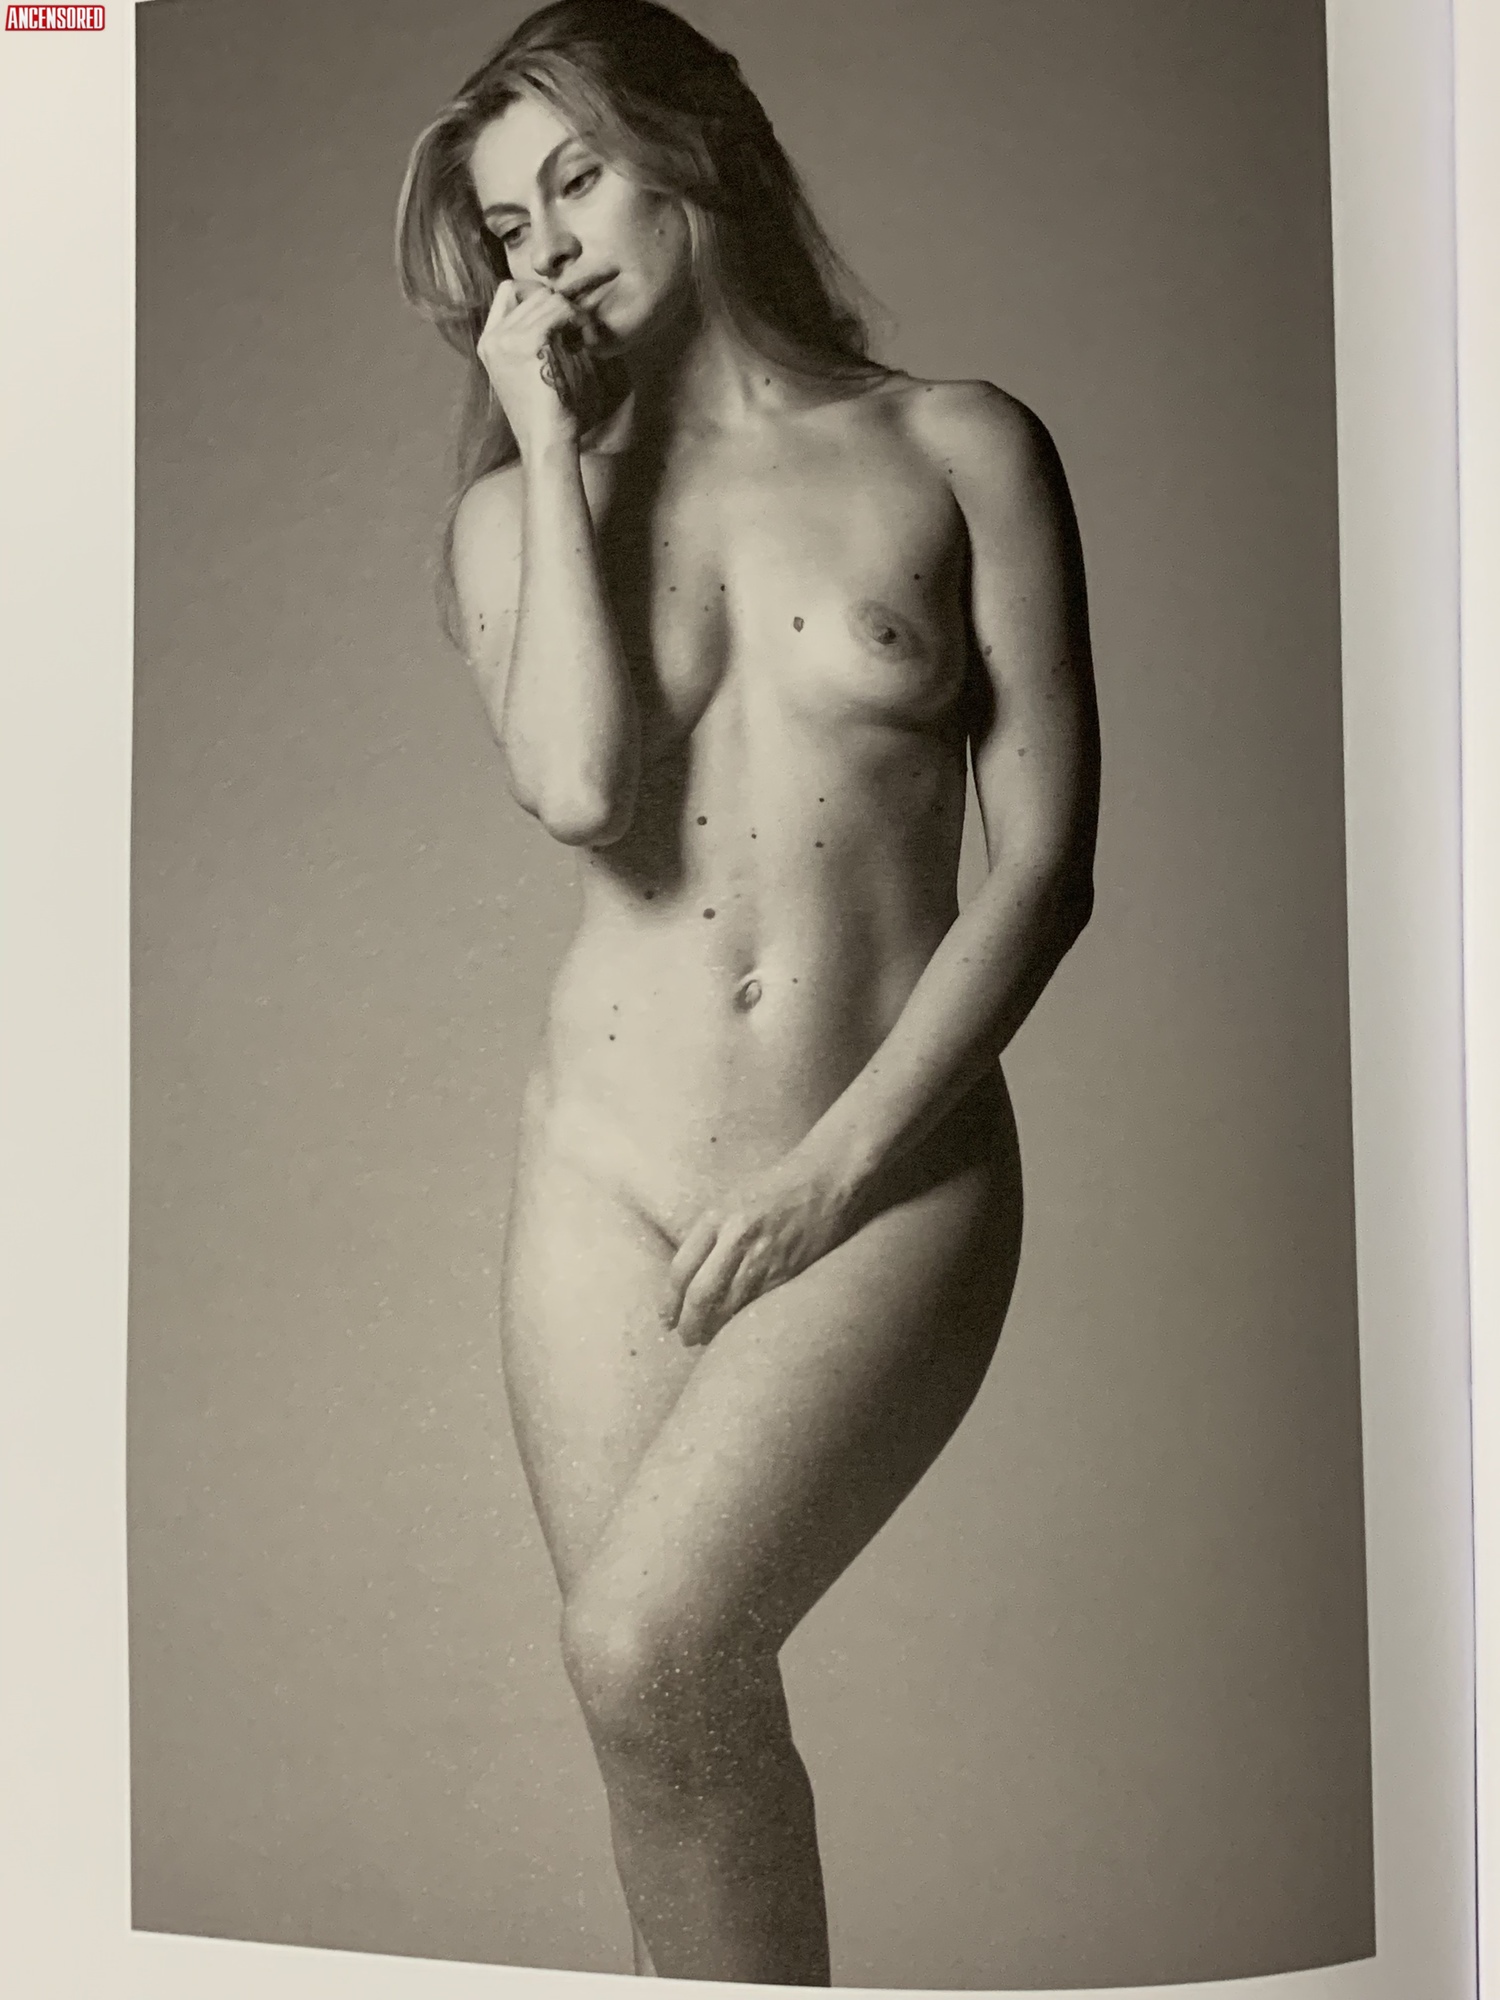 Lana Rhodes nude pics.